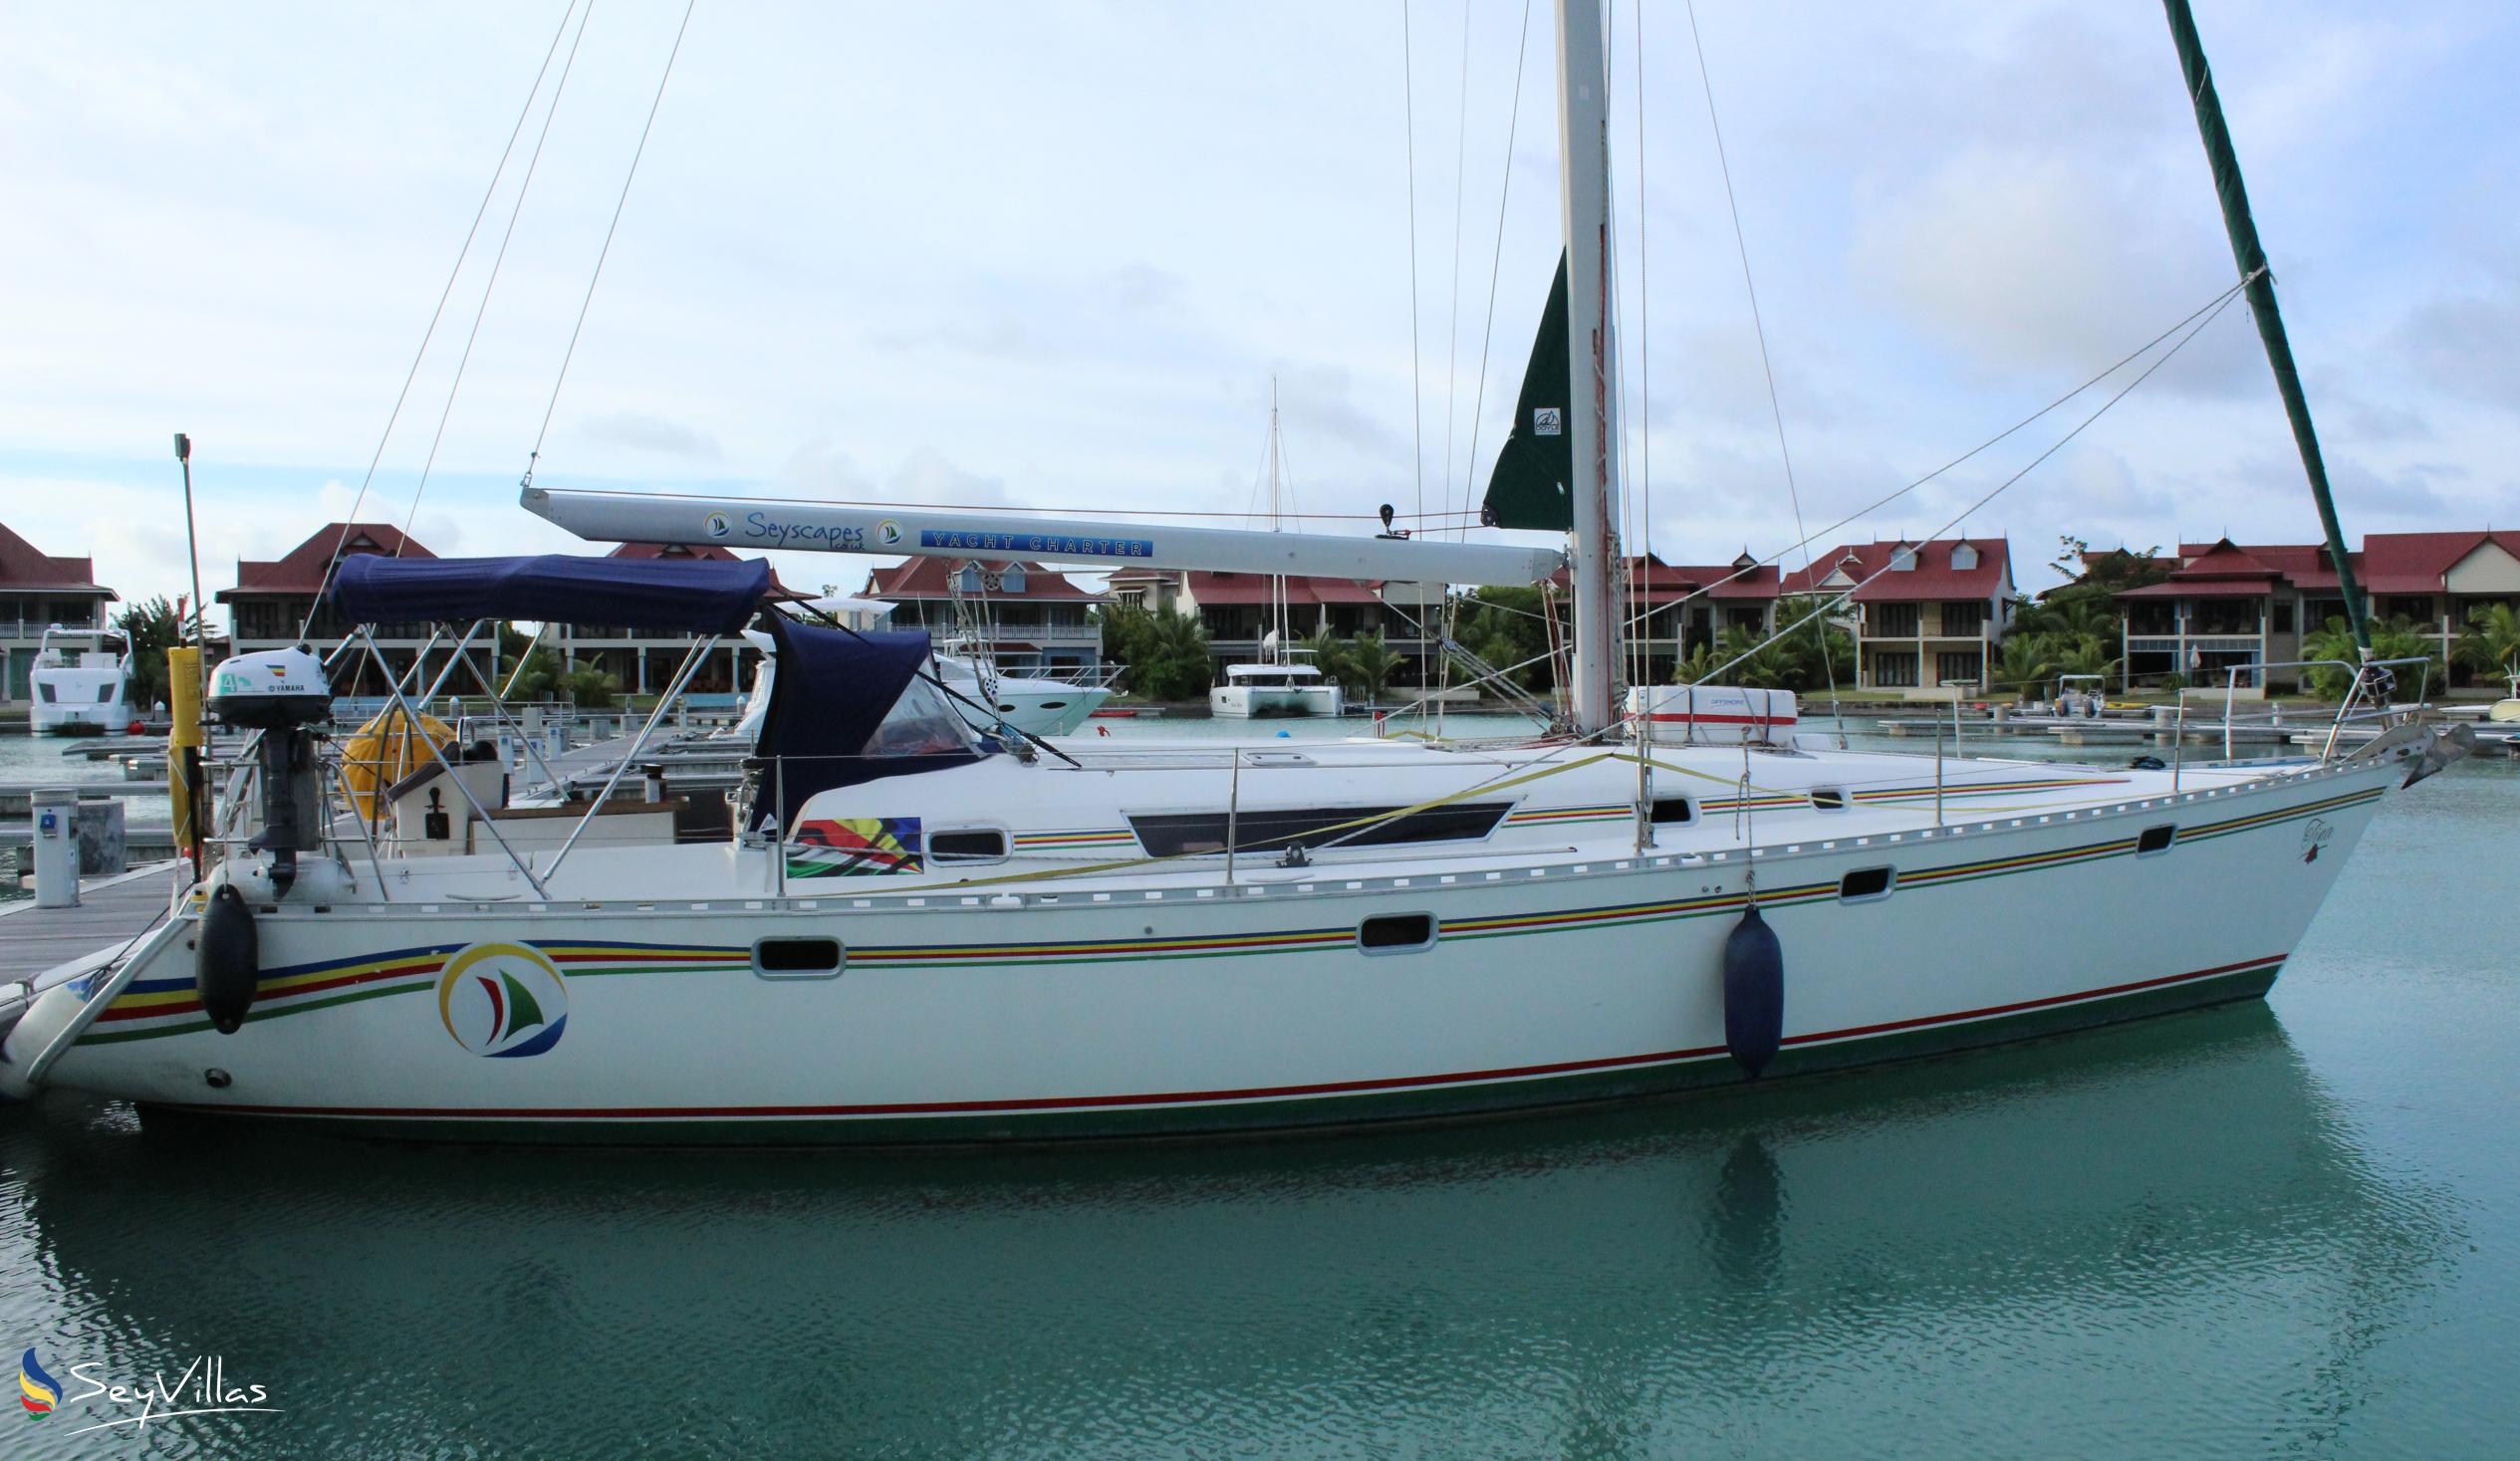 Photo 26: Seyscapes Yacht Charter - Full Charter Tina - Seychelles (Seychelles)